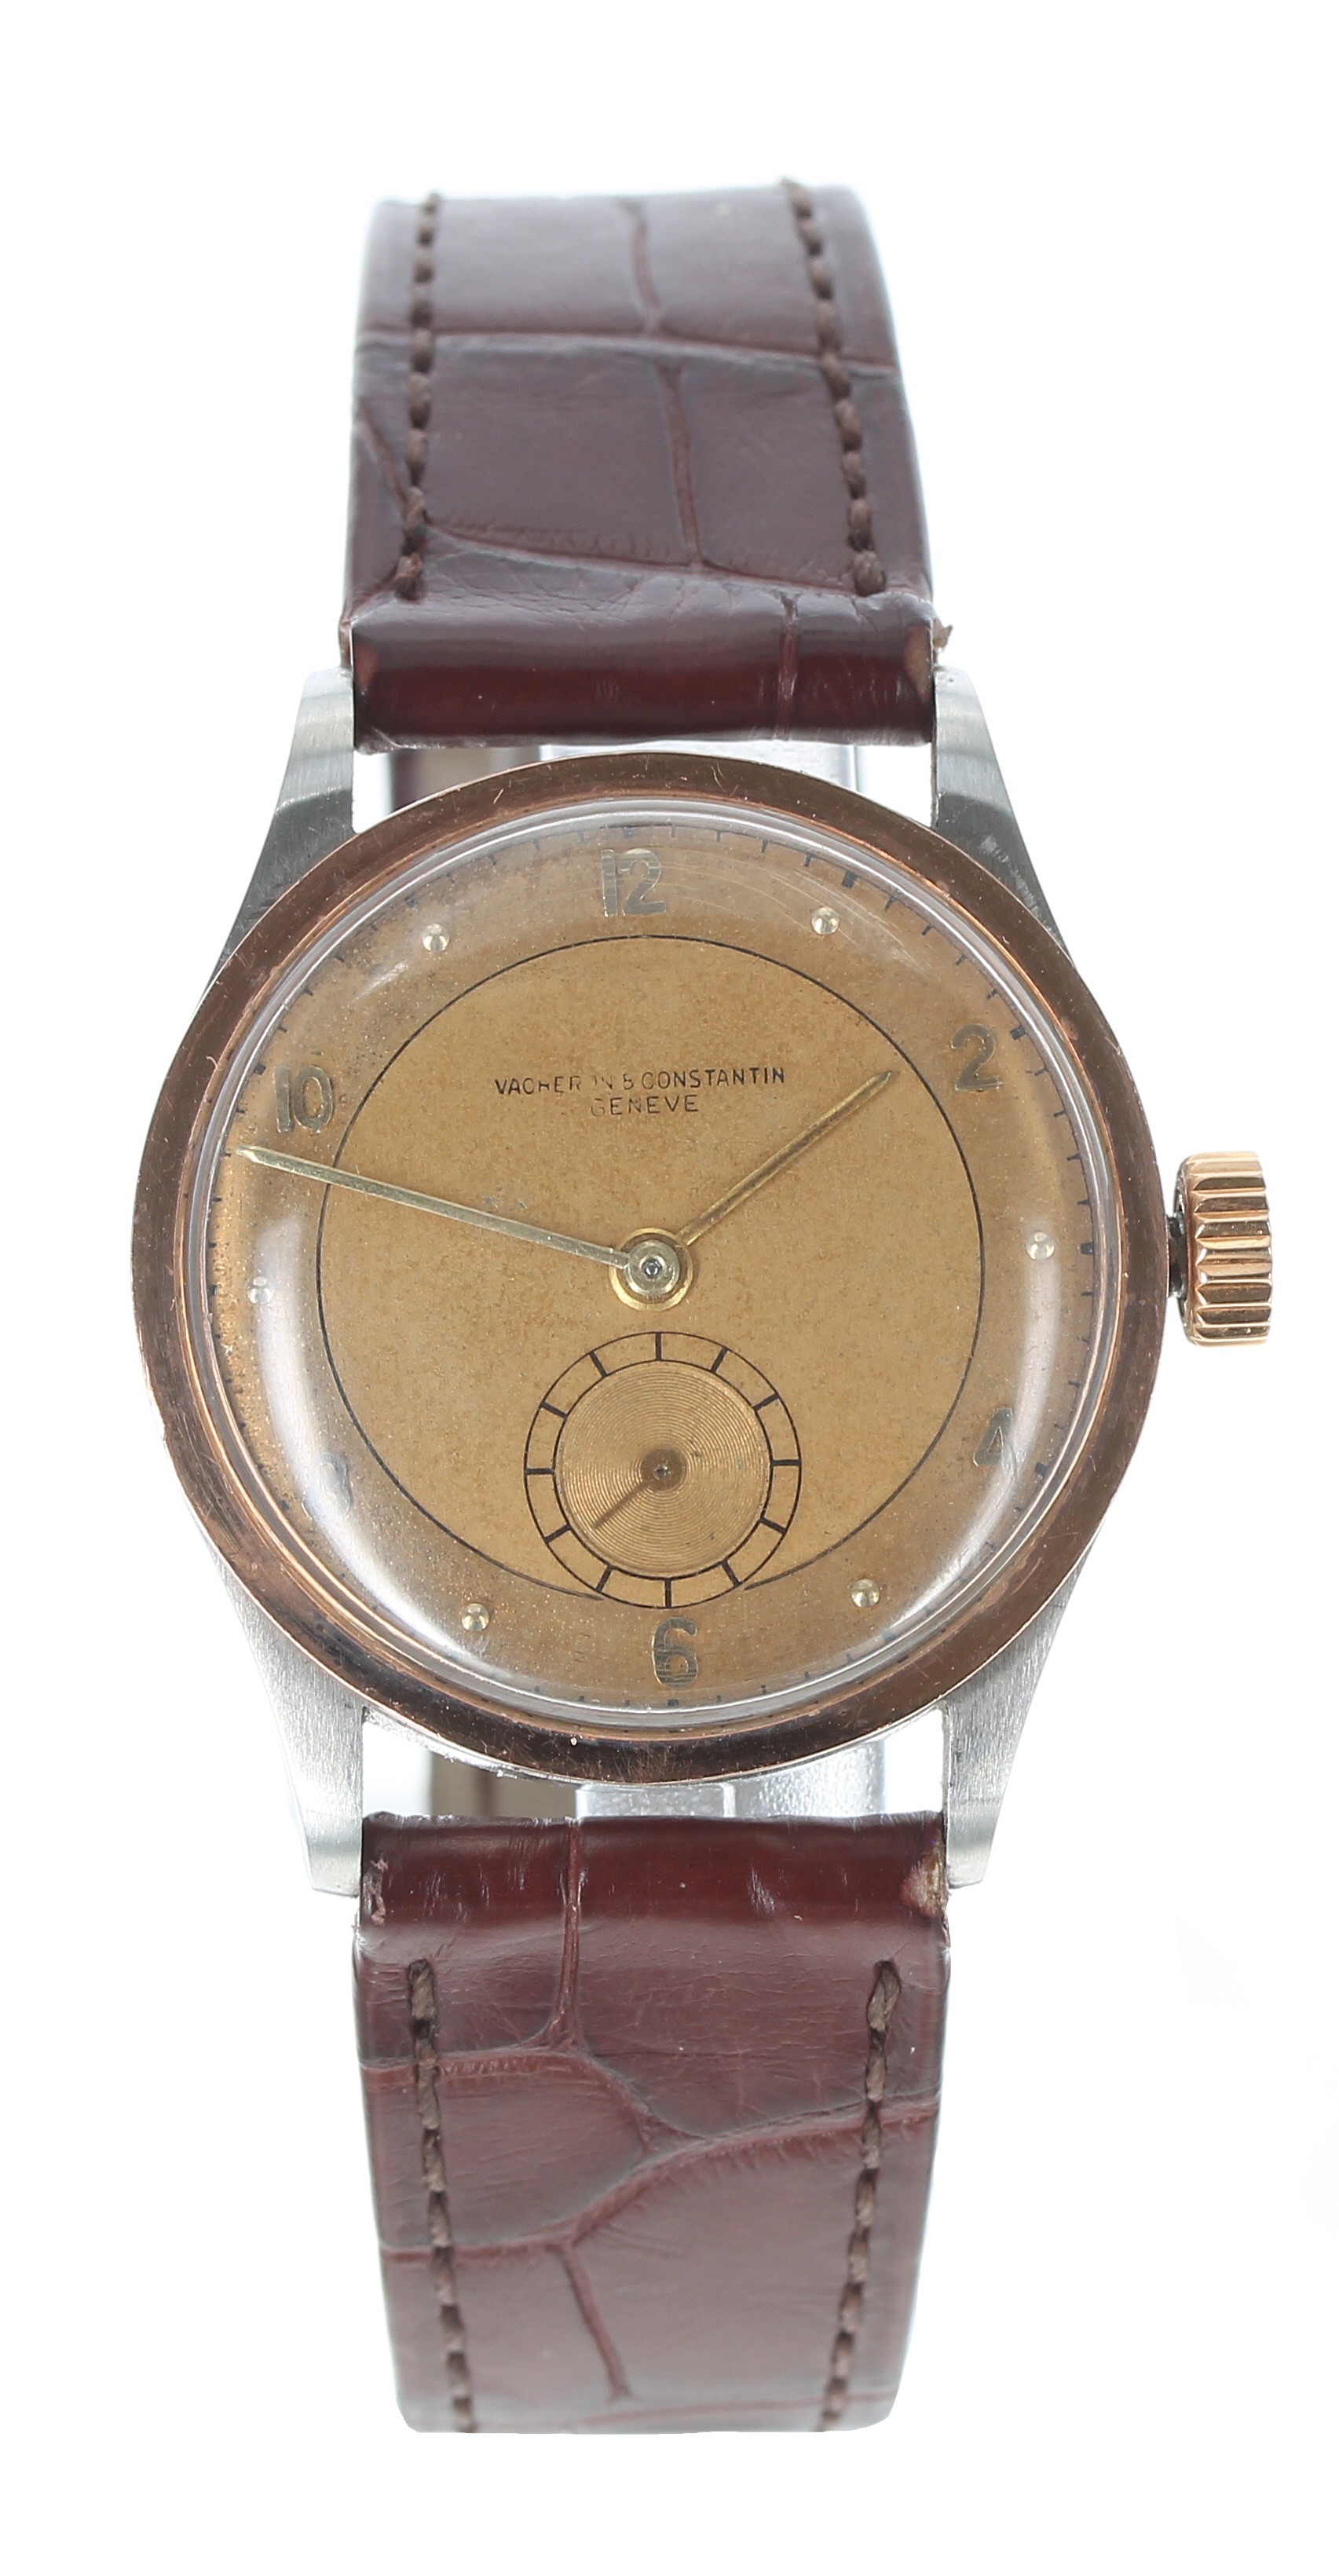 Vacheron & Constantin, Genéve stainless steel gentleman's wristwatch, circa 1940s, pink gold